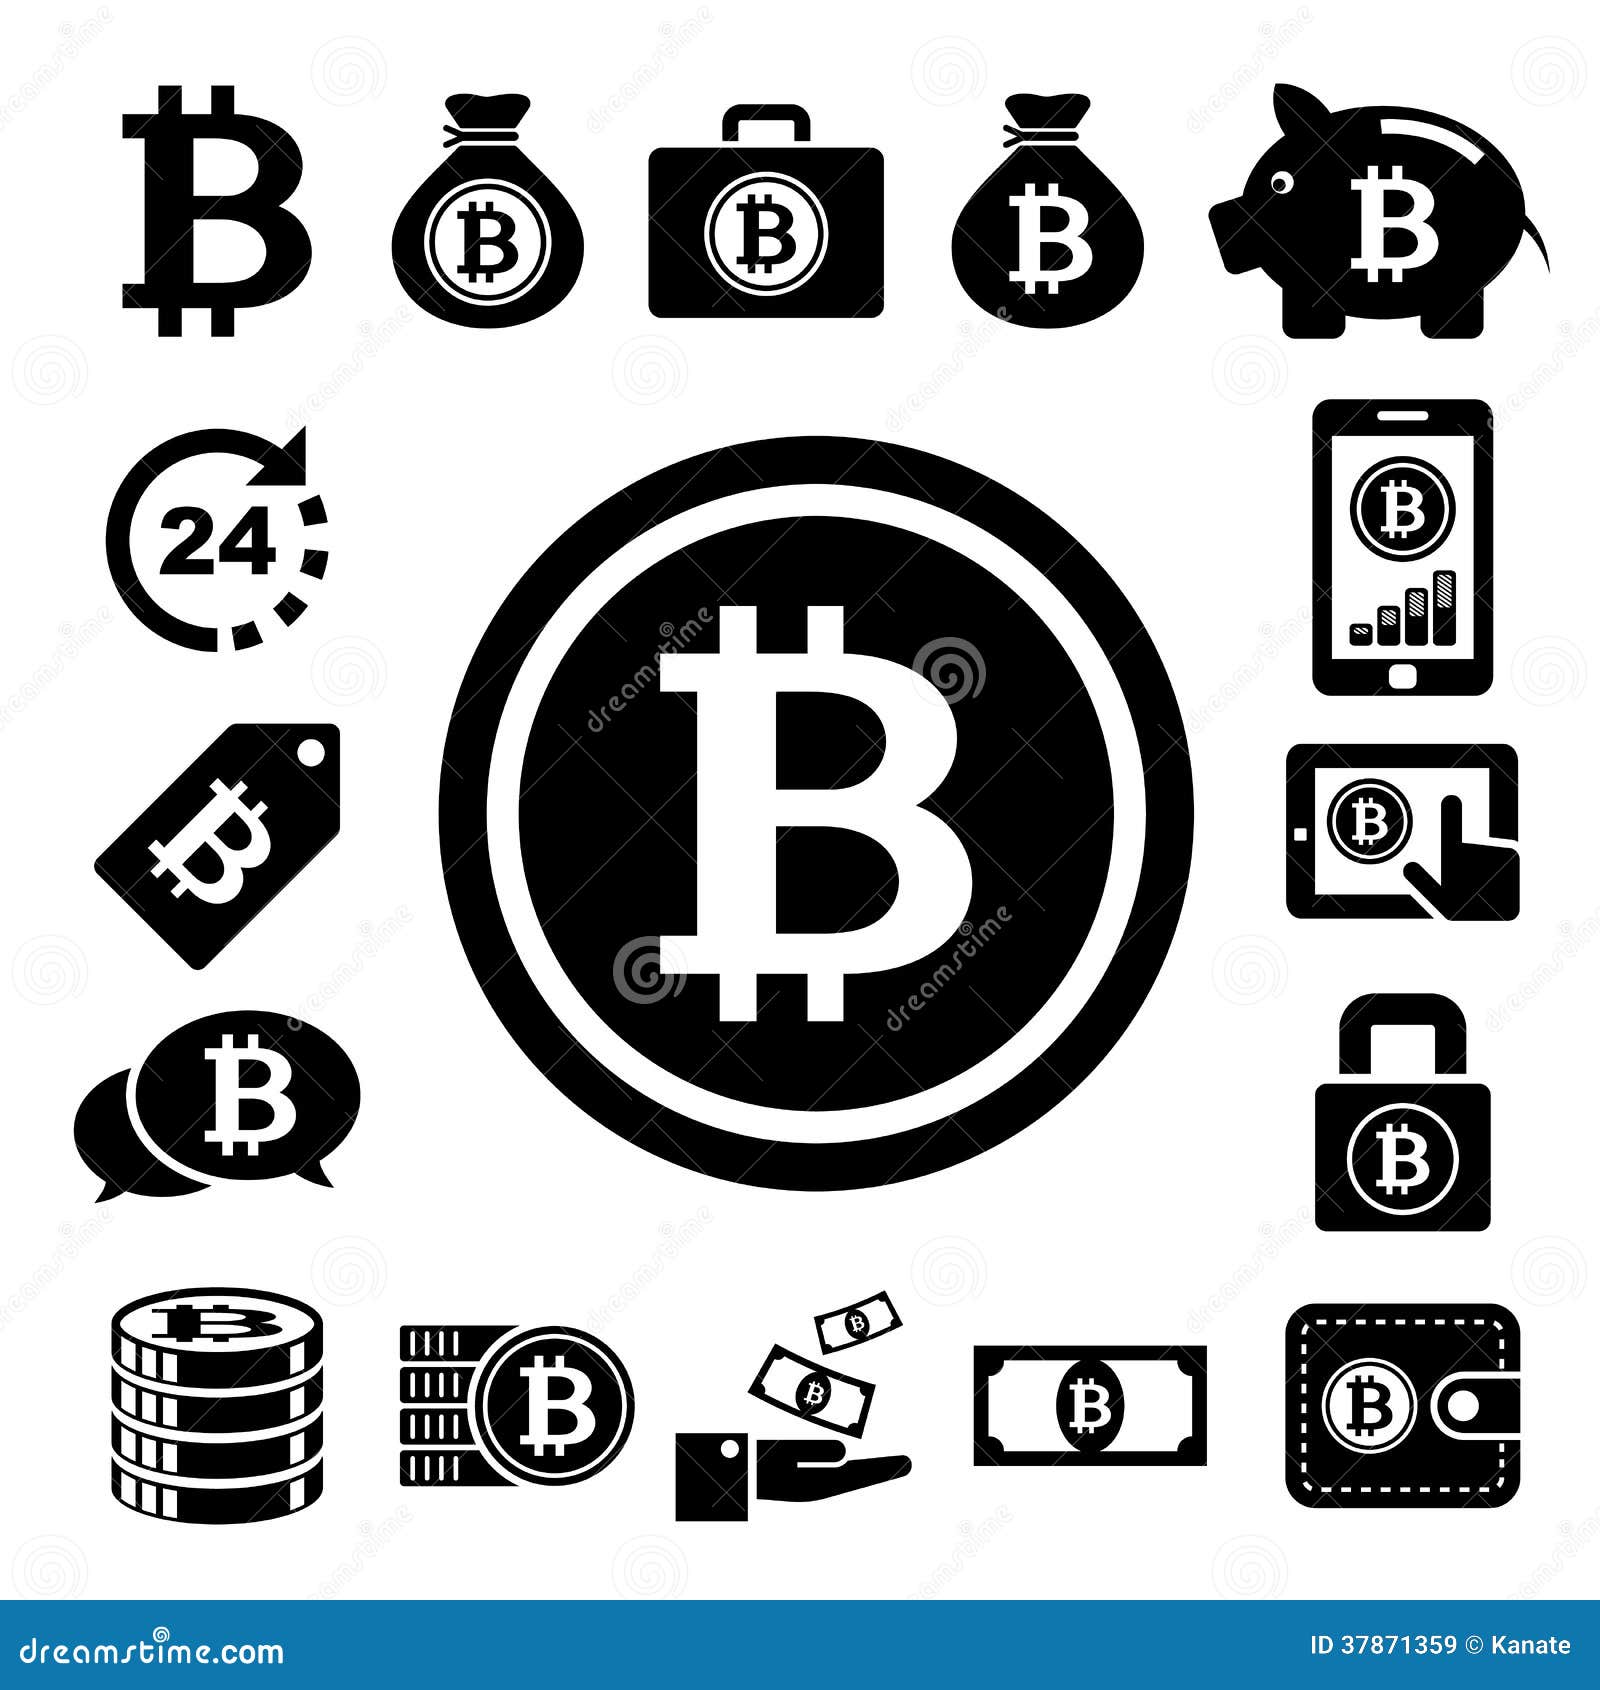 bitcoin icons set